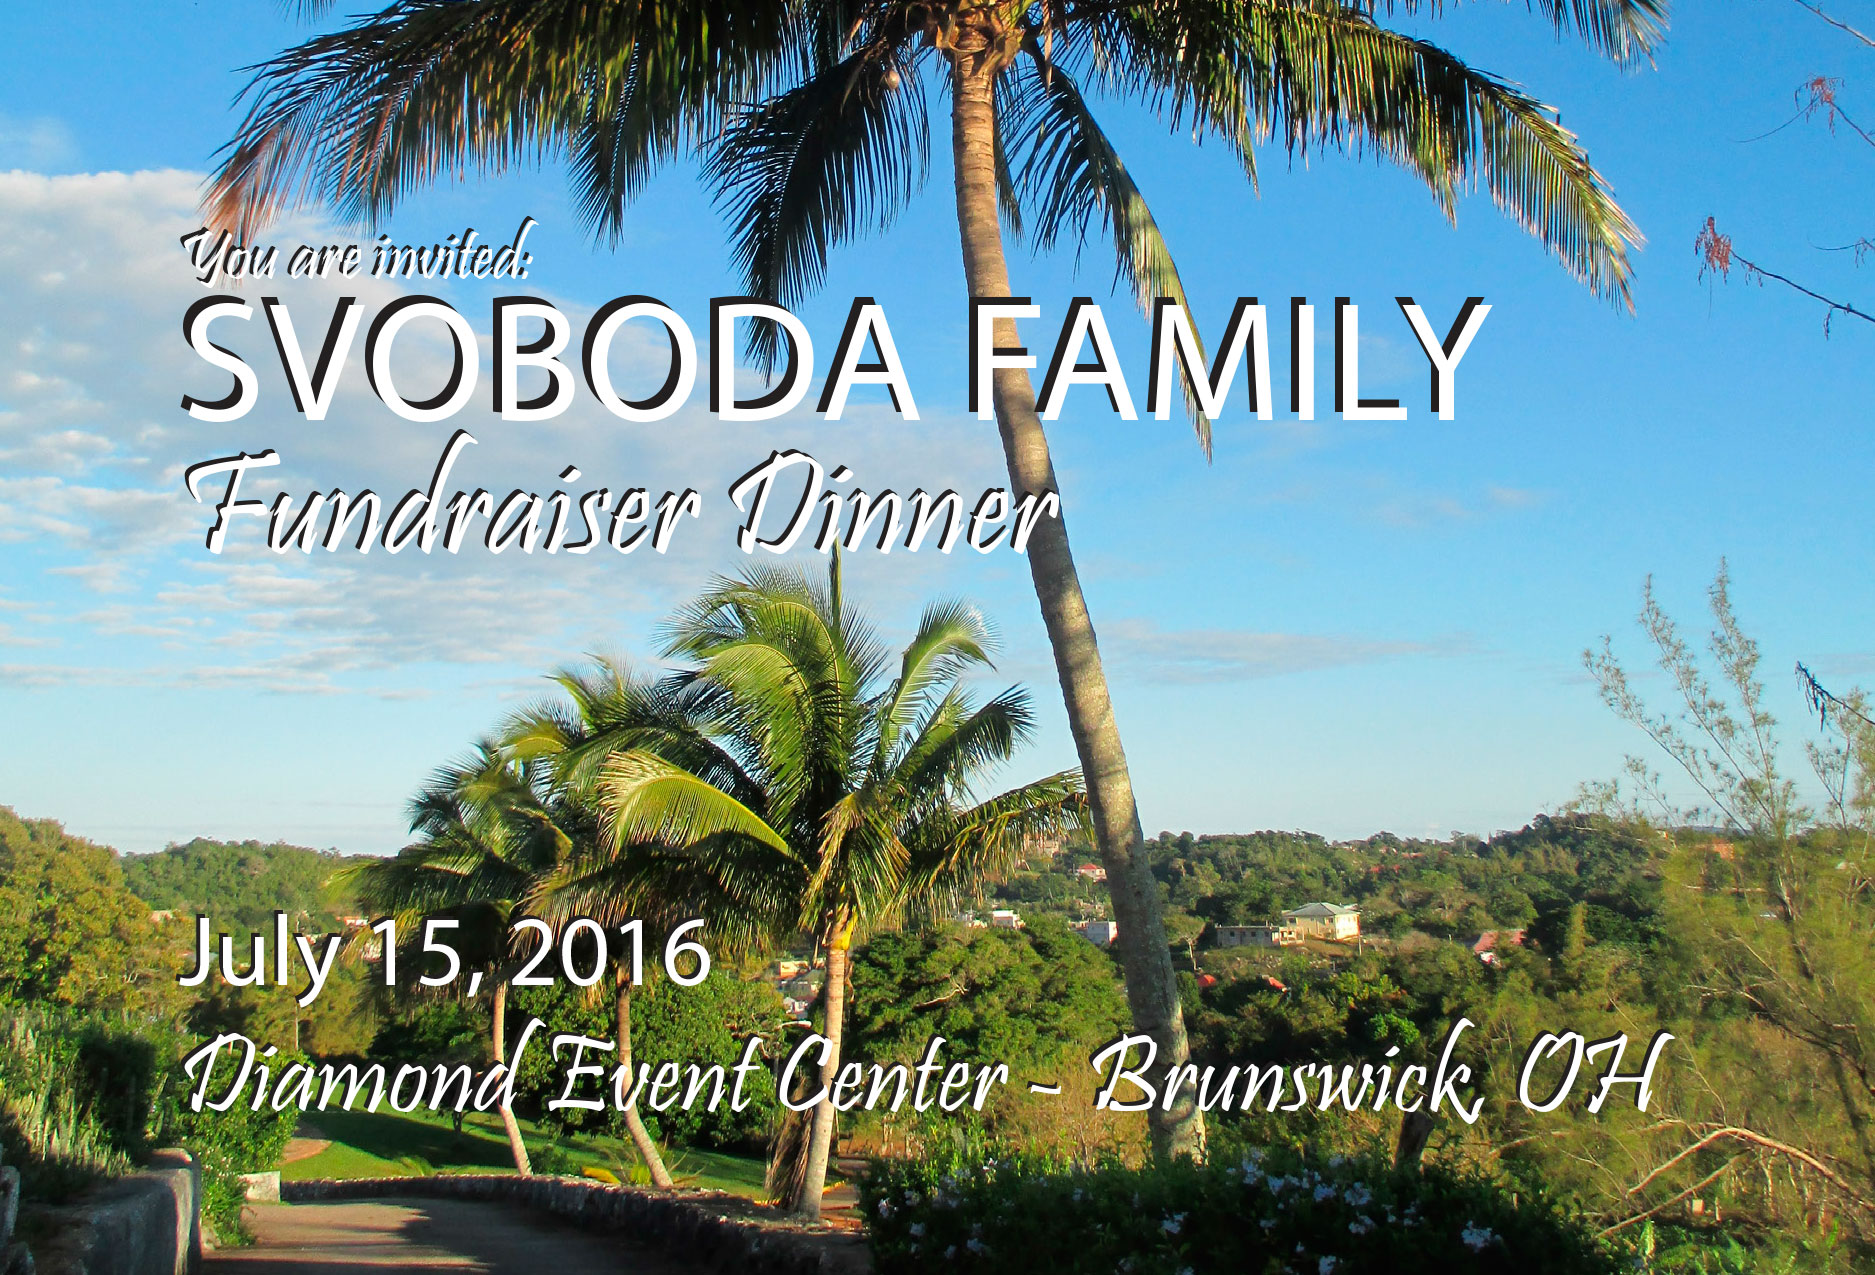 Post Card for the Svoboda Family